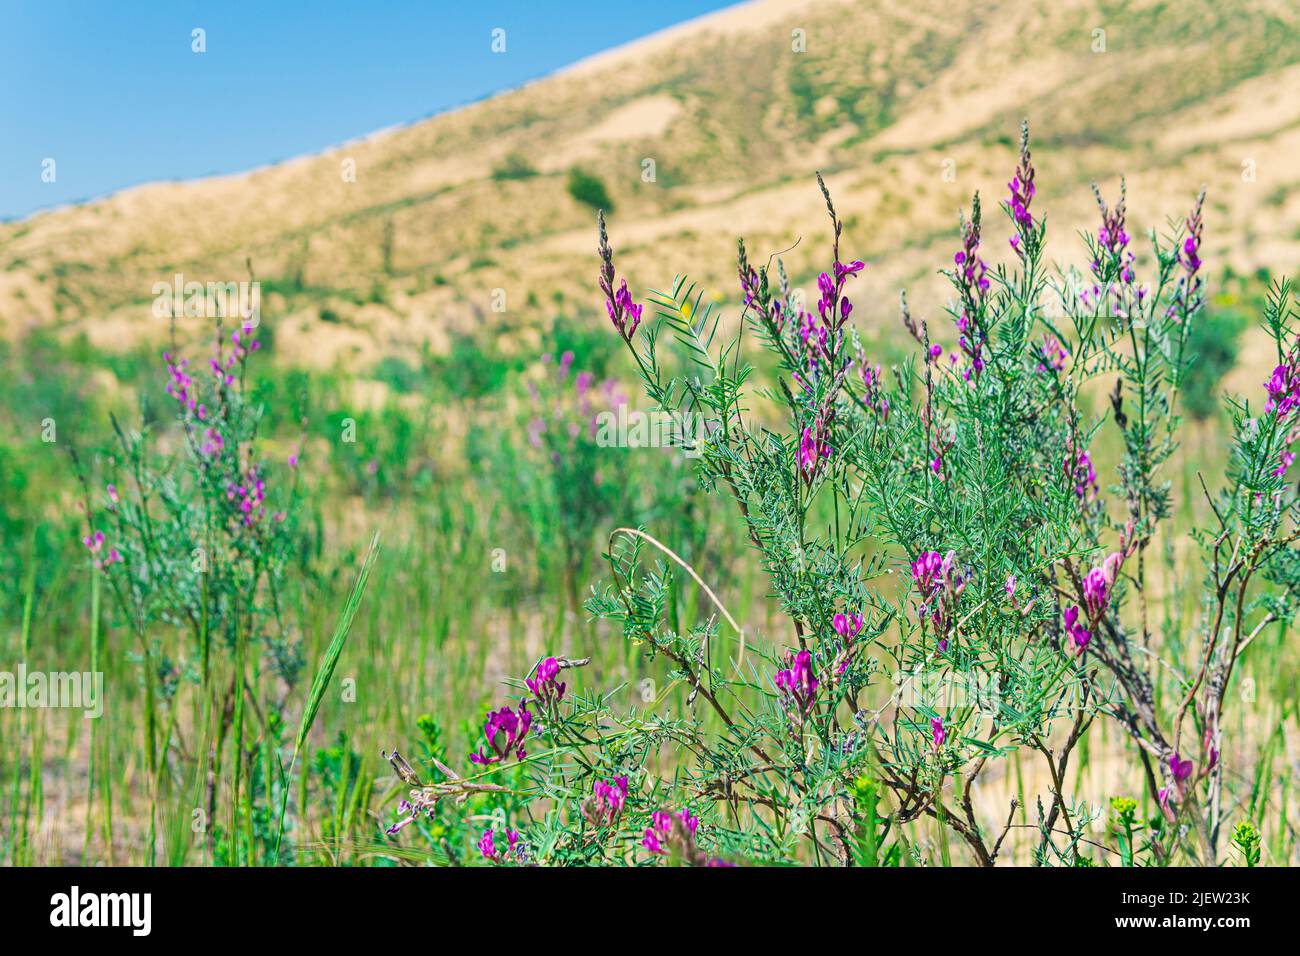 purple astragalus flowers in blooming spring desert, Sarykum sand dune Stock Photo